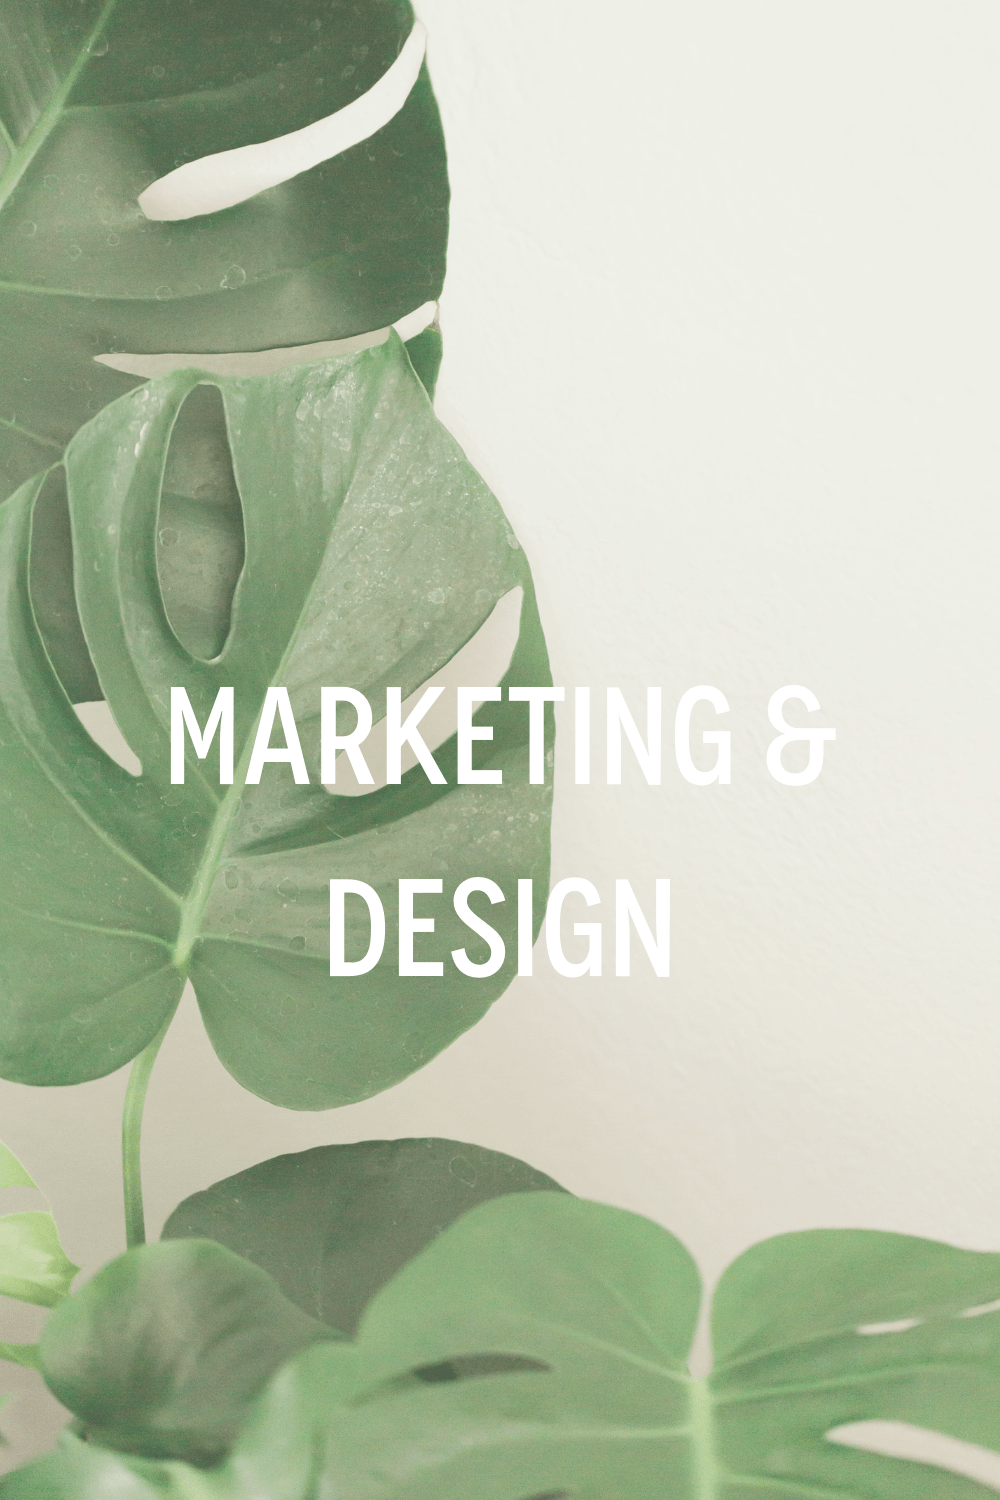 Marketing & design